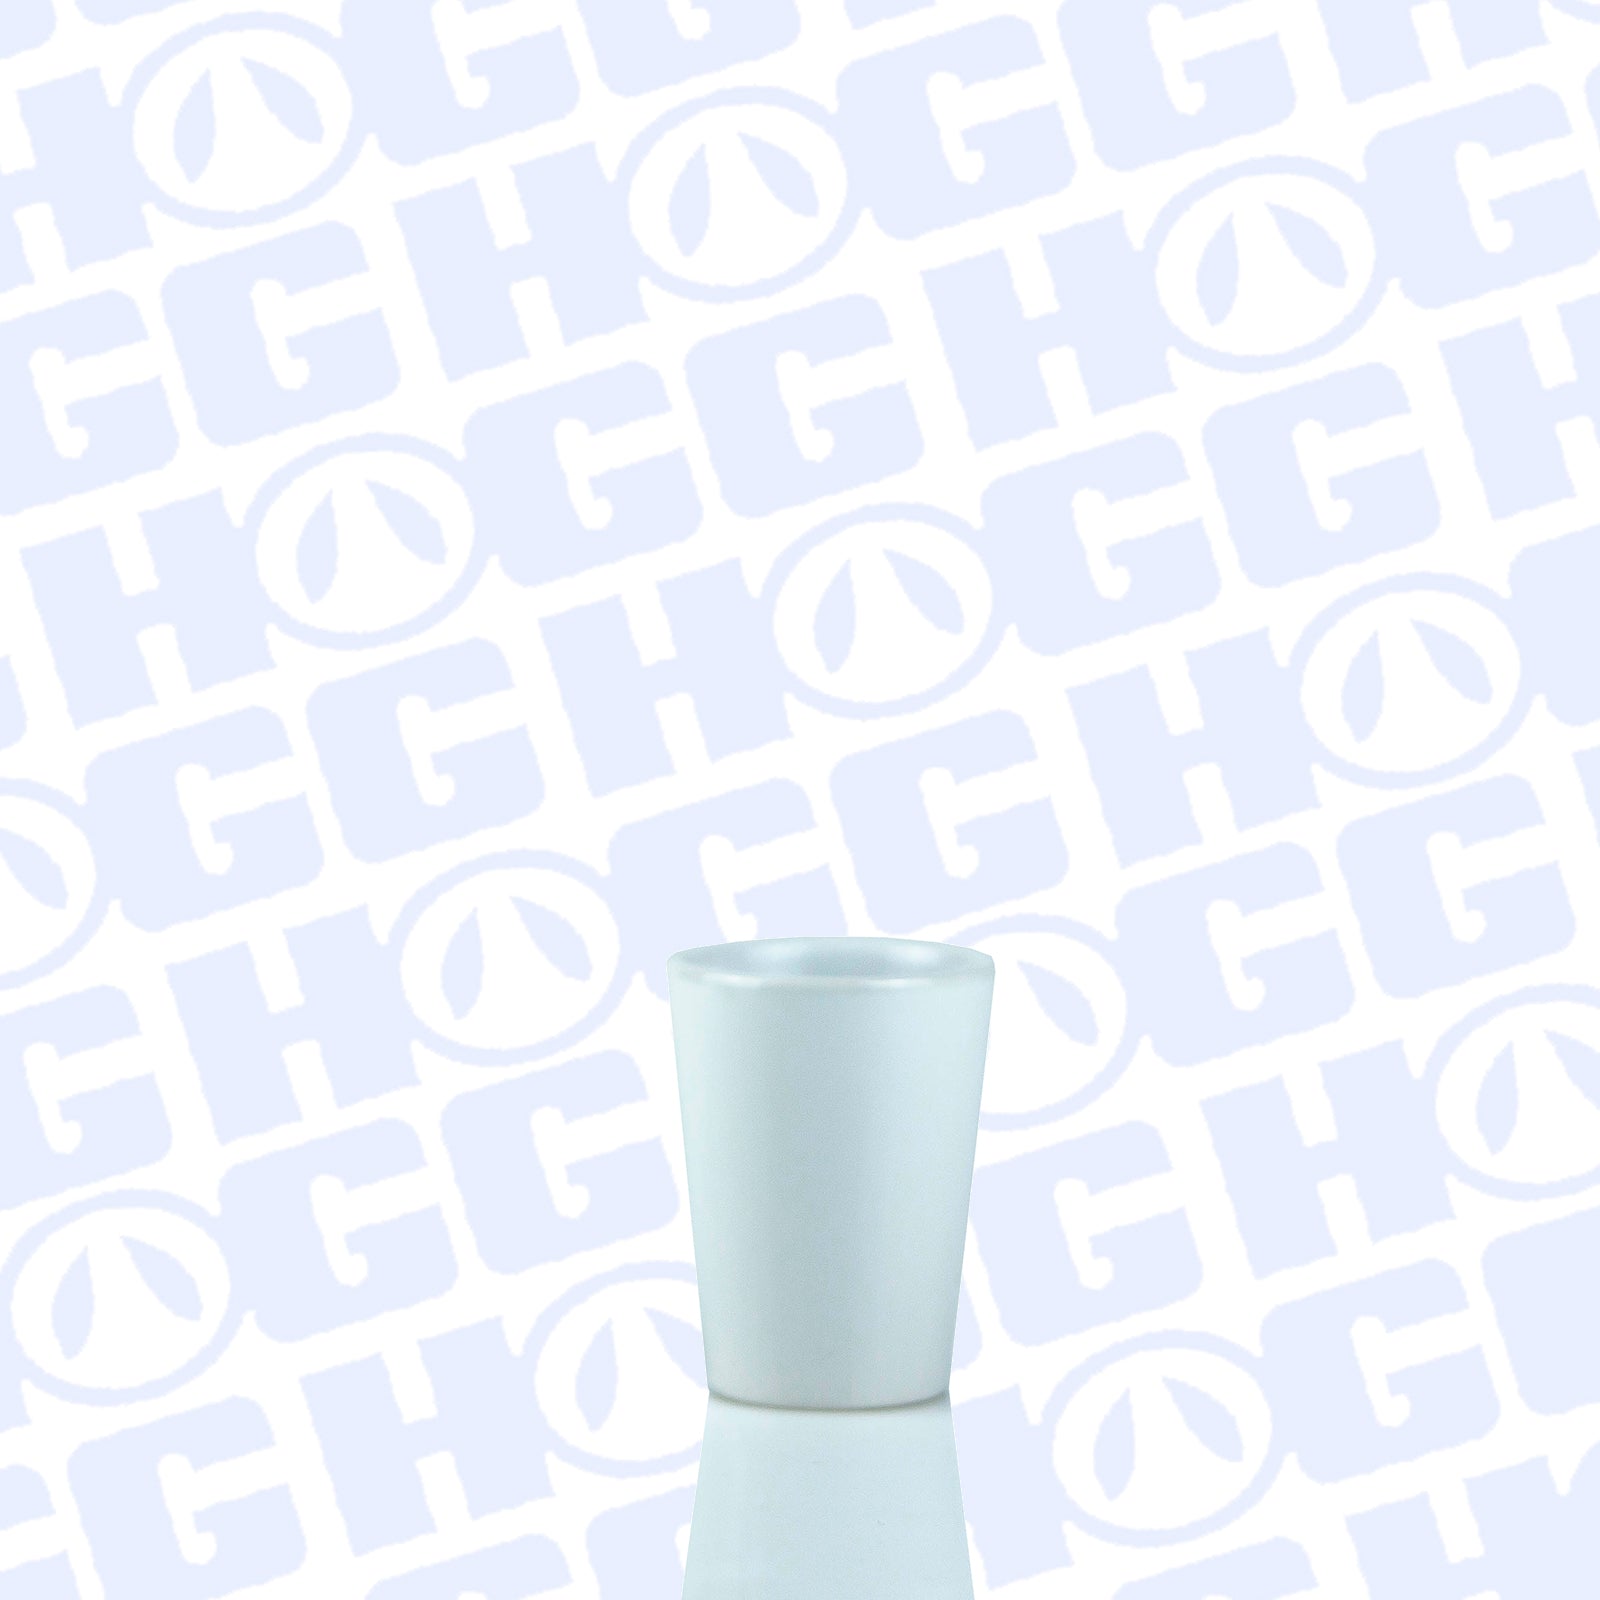 Sublimation Ceramic shot glass(short) 1 1/2 – We Sub'N